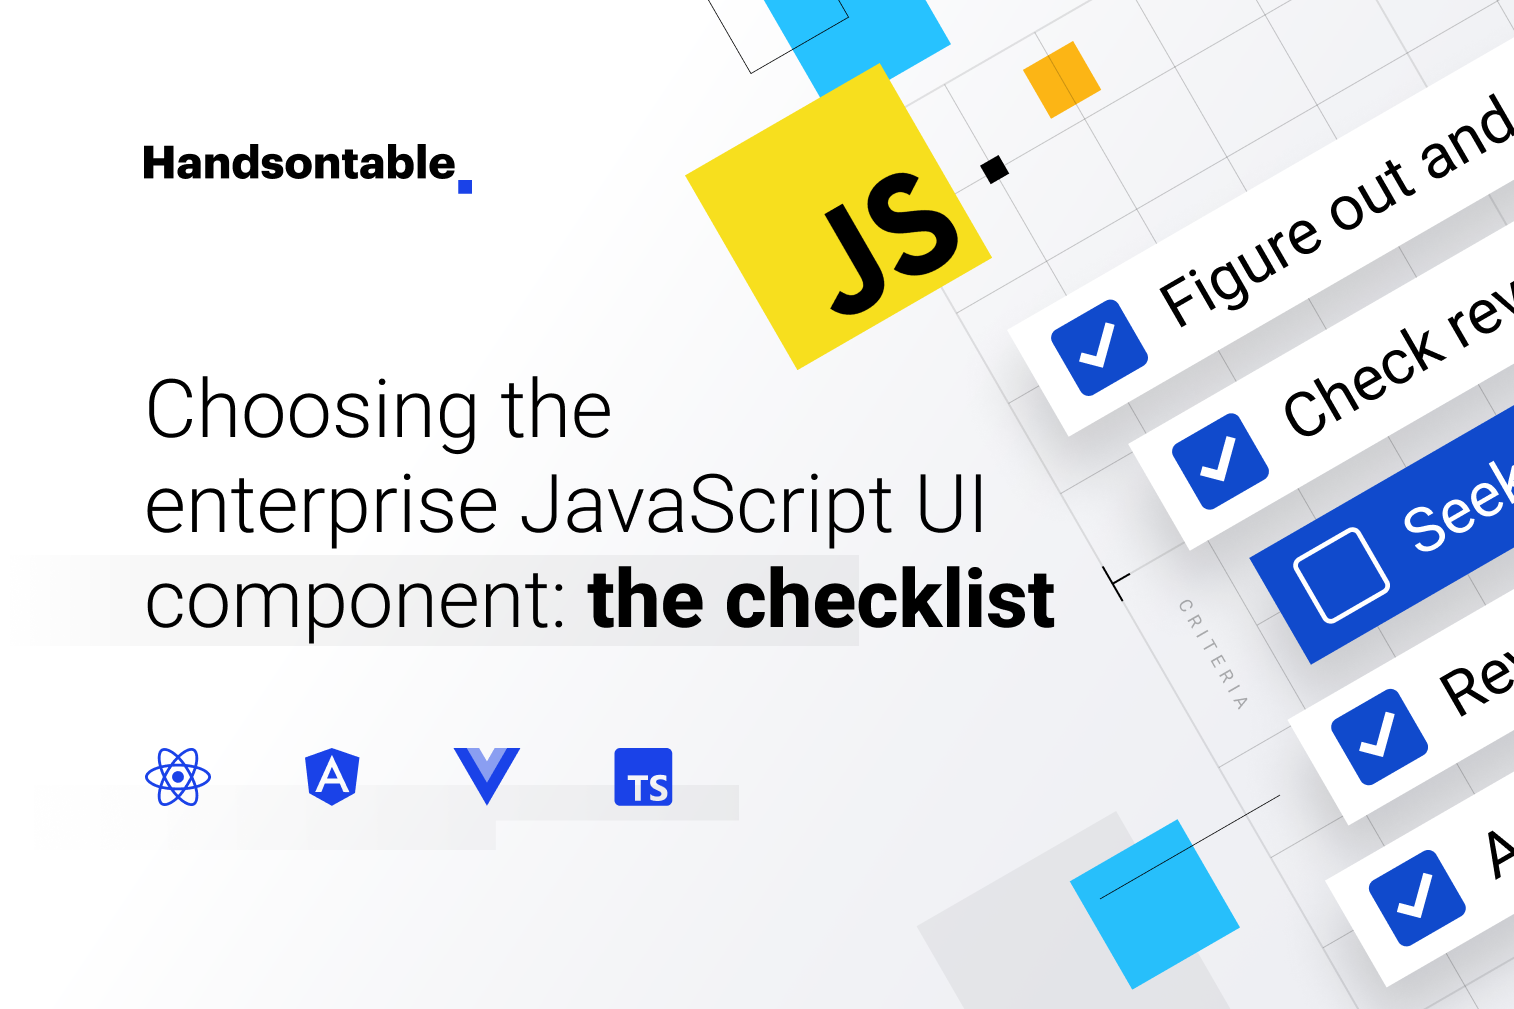 Illustration for a blog post -Choosing the enterprise JavaScript UI component: the checklist